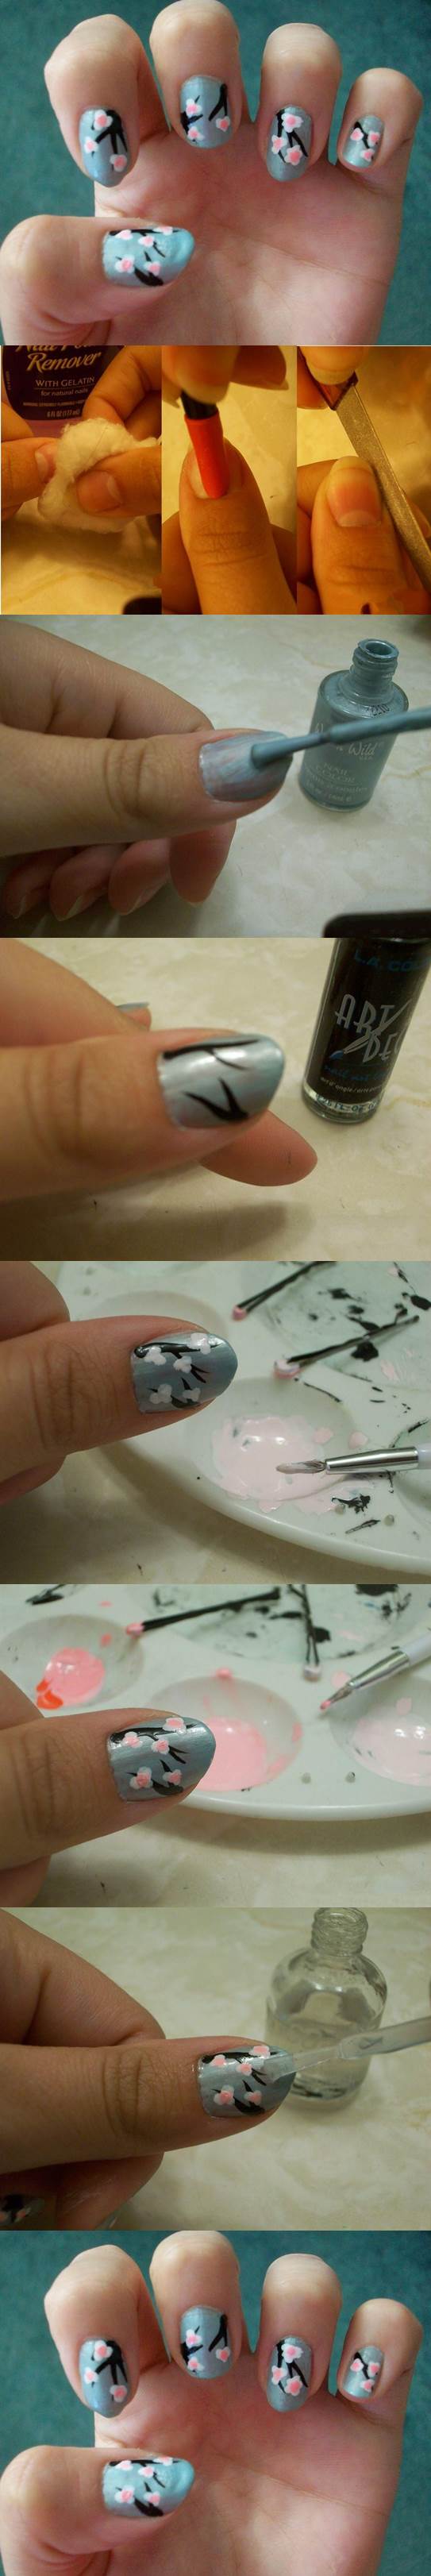 DIY Cherry Blossom Nail Art 2